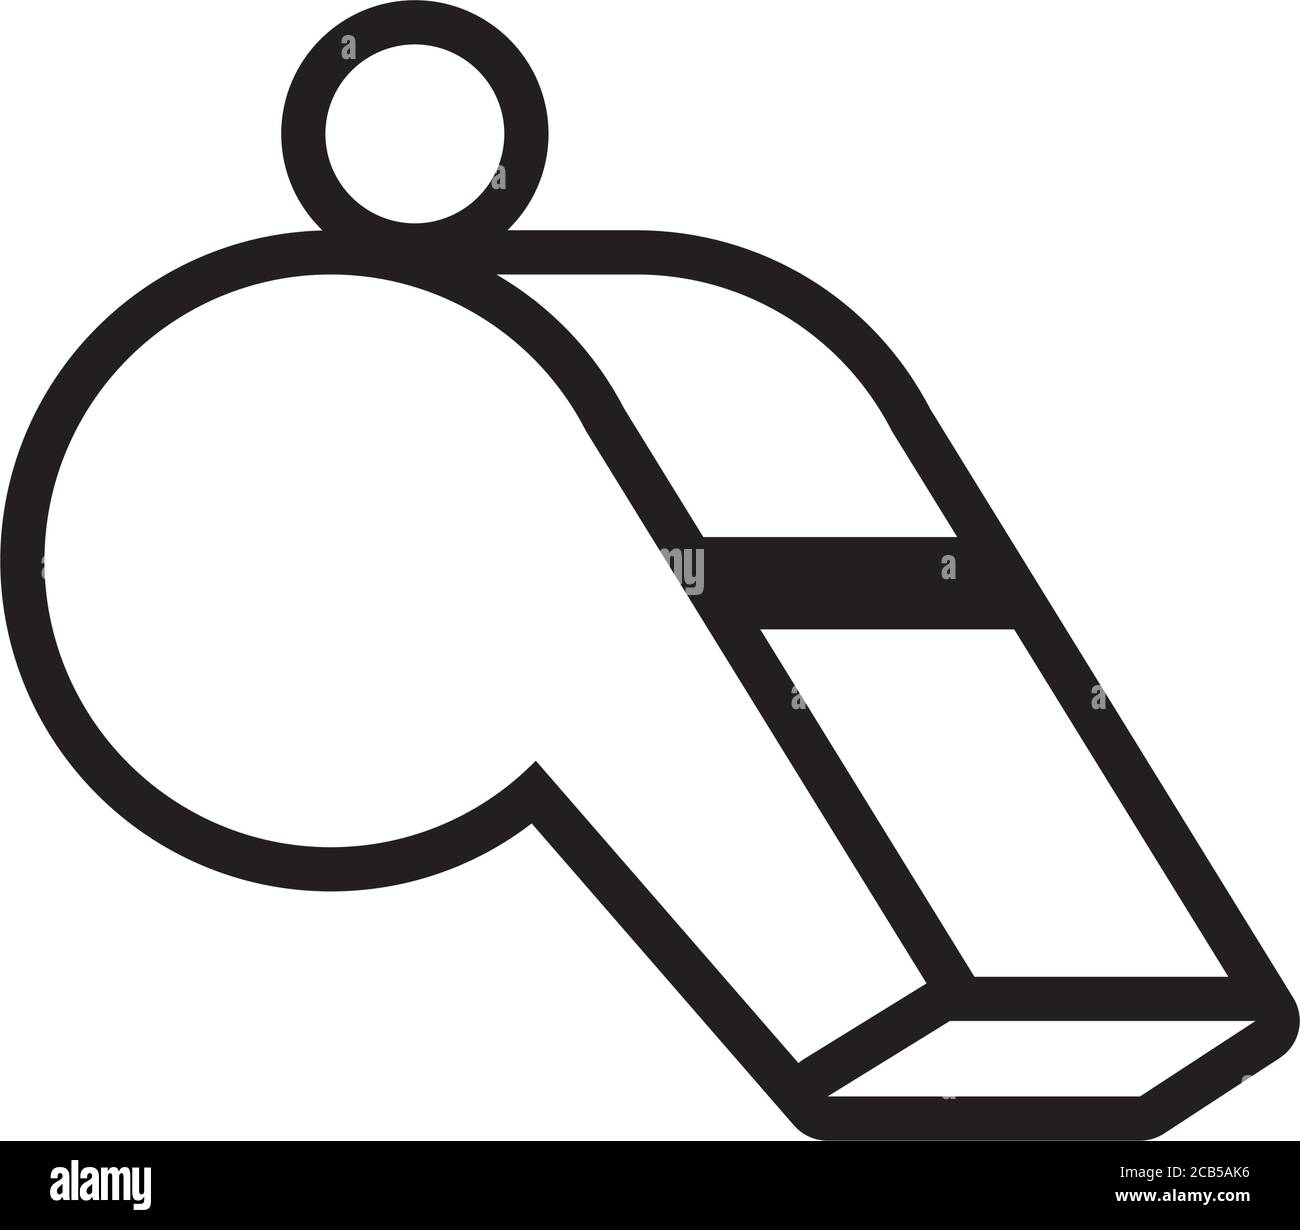 silbato árbitro accesorio línea estilo icono vector ilustración diseño  Imagen Vector de stock - Alamy